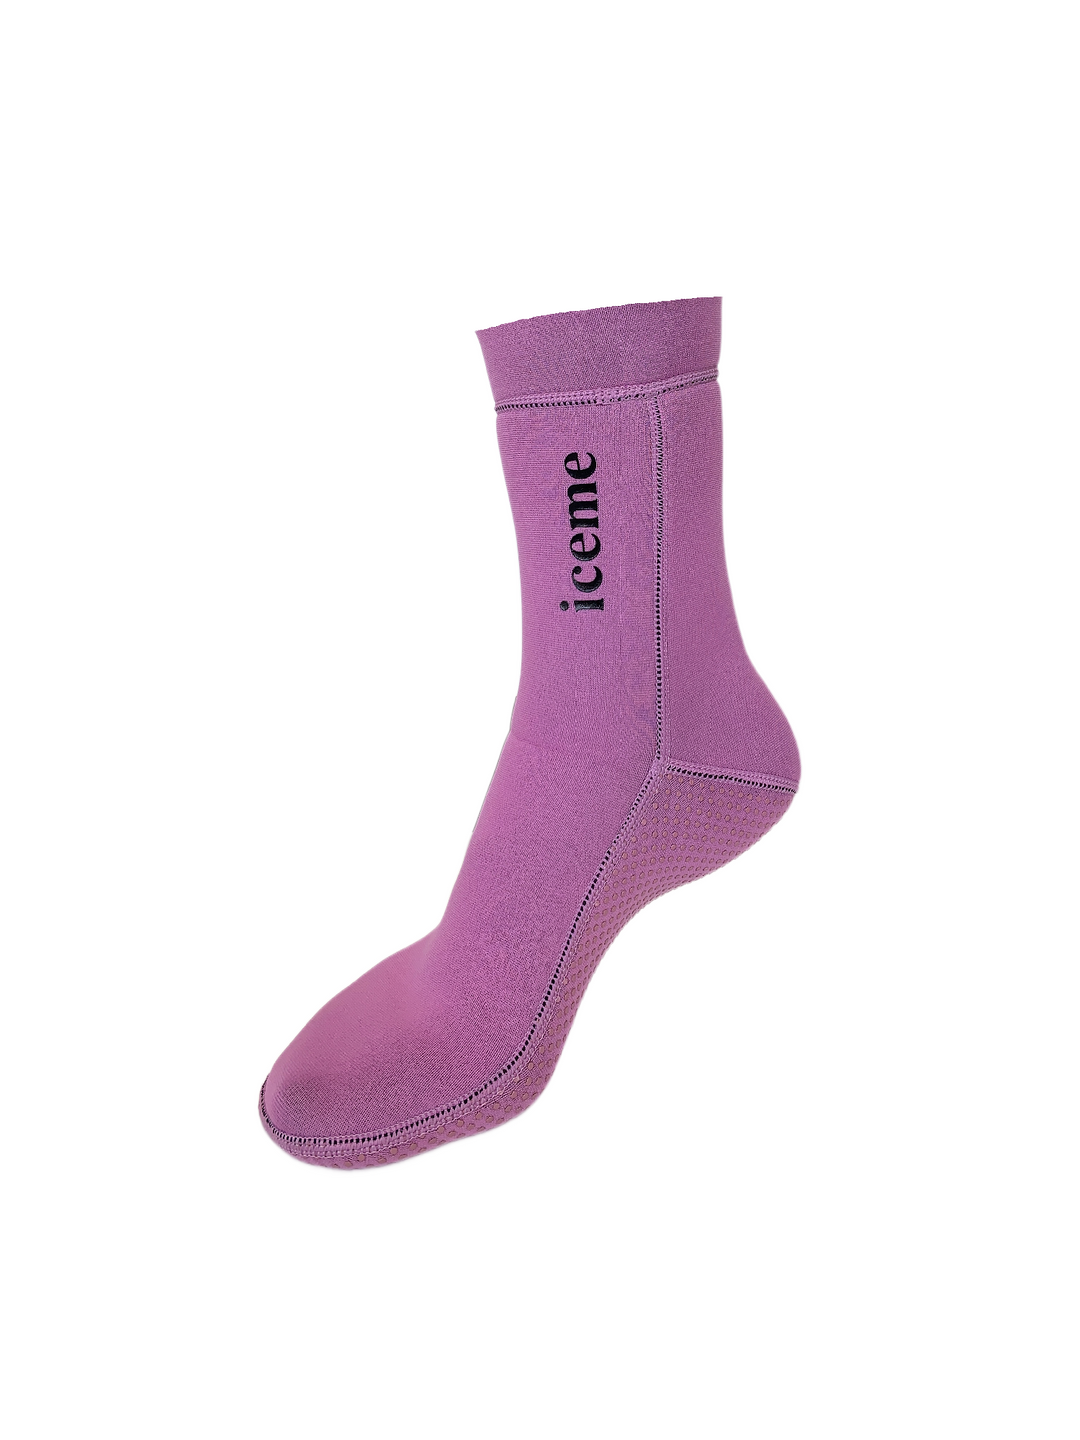 Iceme neoprene socks - Lilac